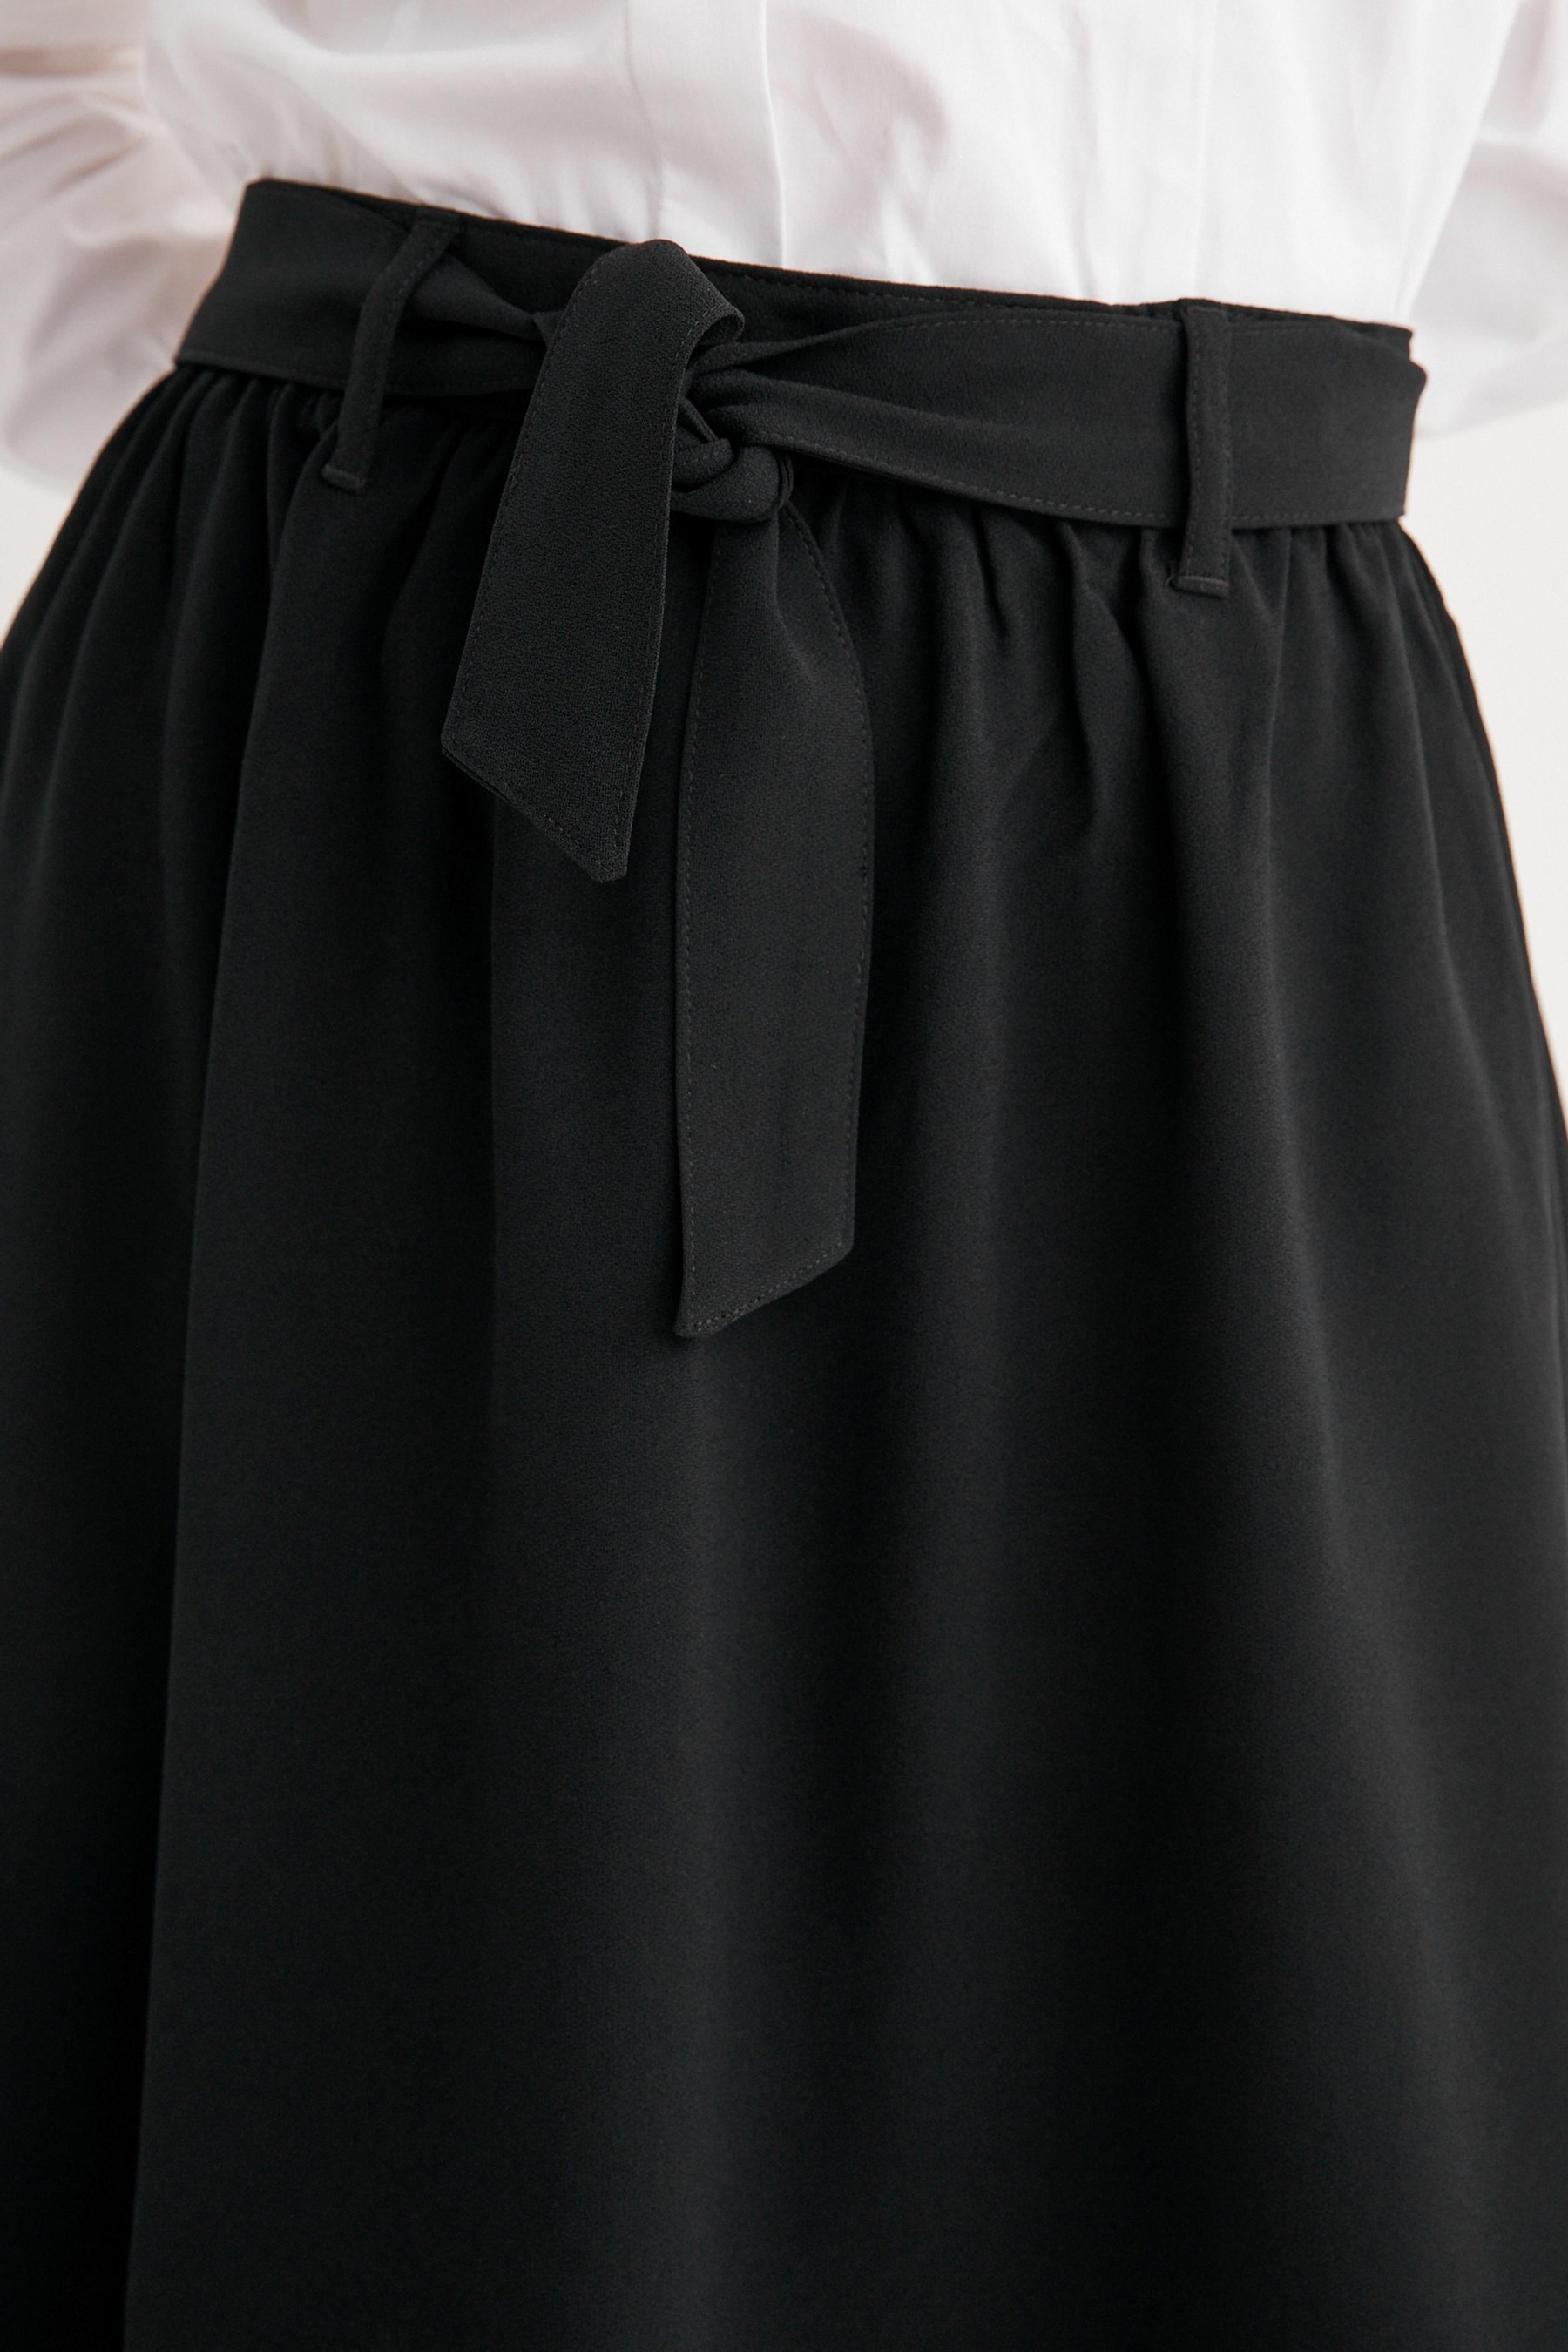 Tie Front School Skirt (3-16yrs)